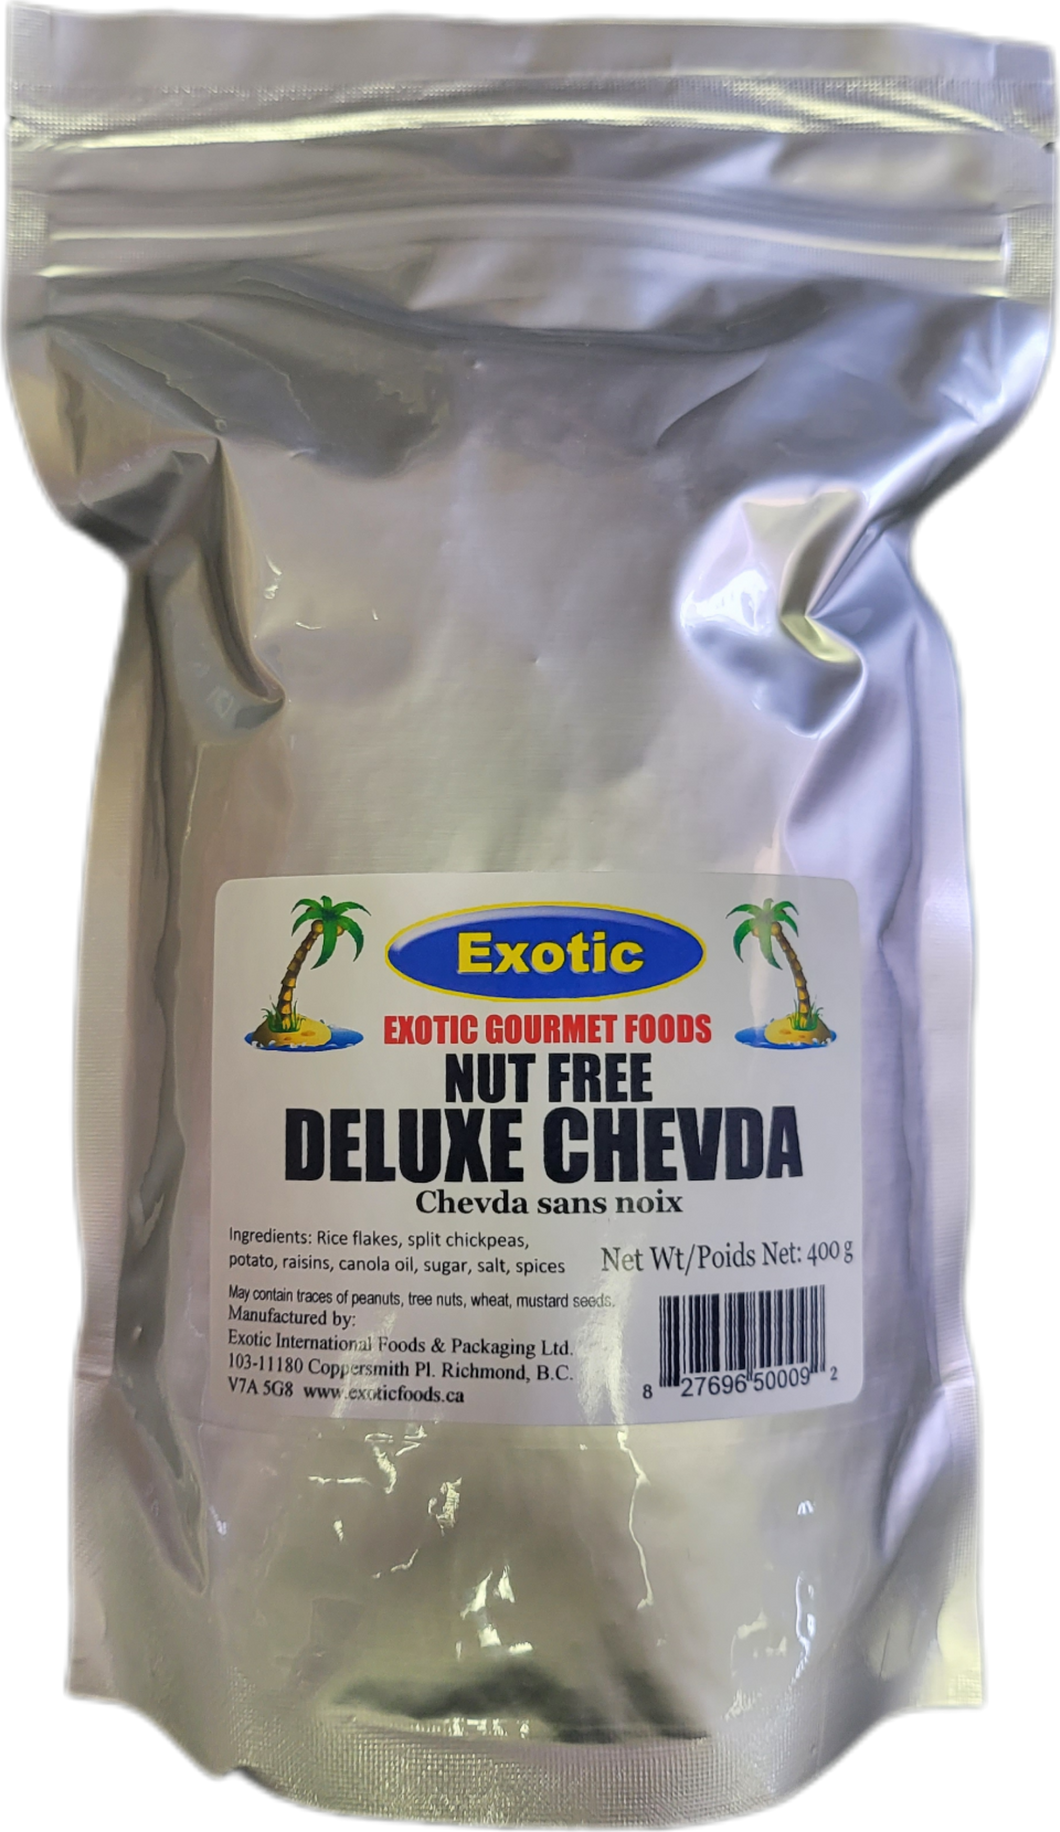 Nutfree Deluxe Chevda